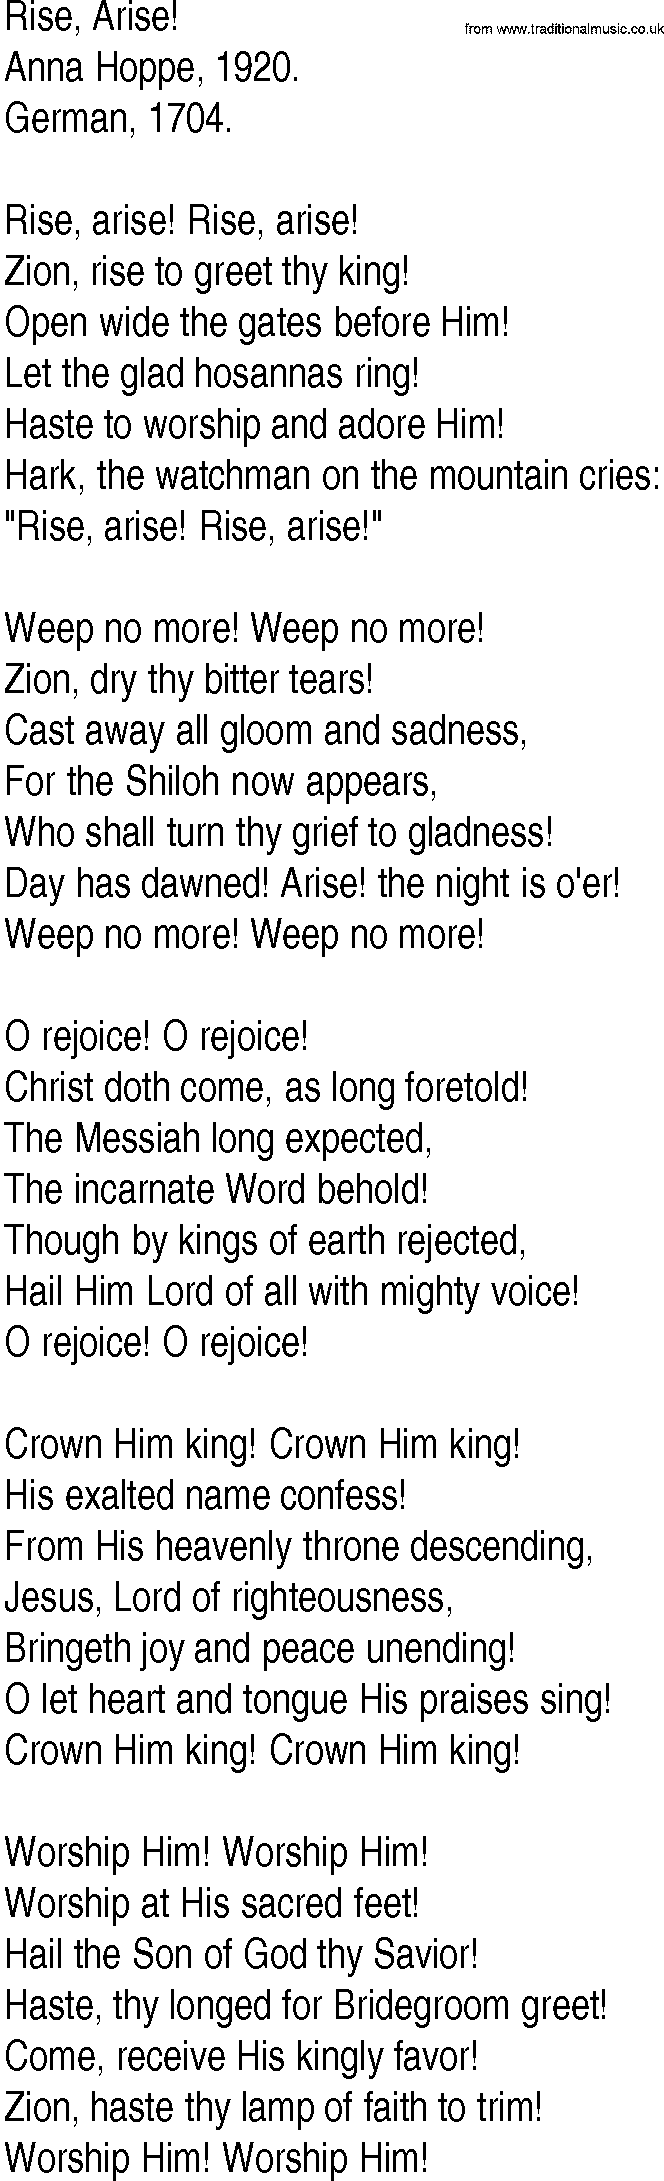 Hymn and Gospel Song: Rise, Arise! by Anna Hoppe lyrics